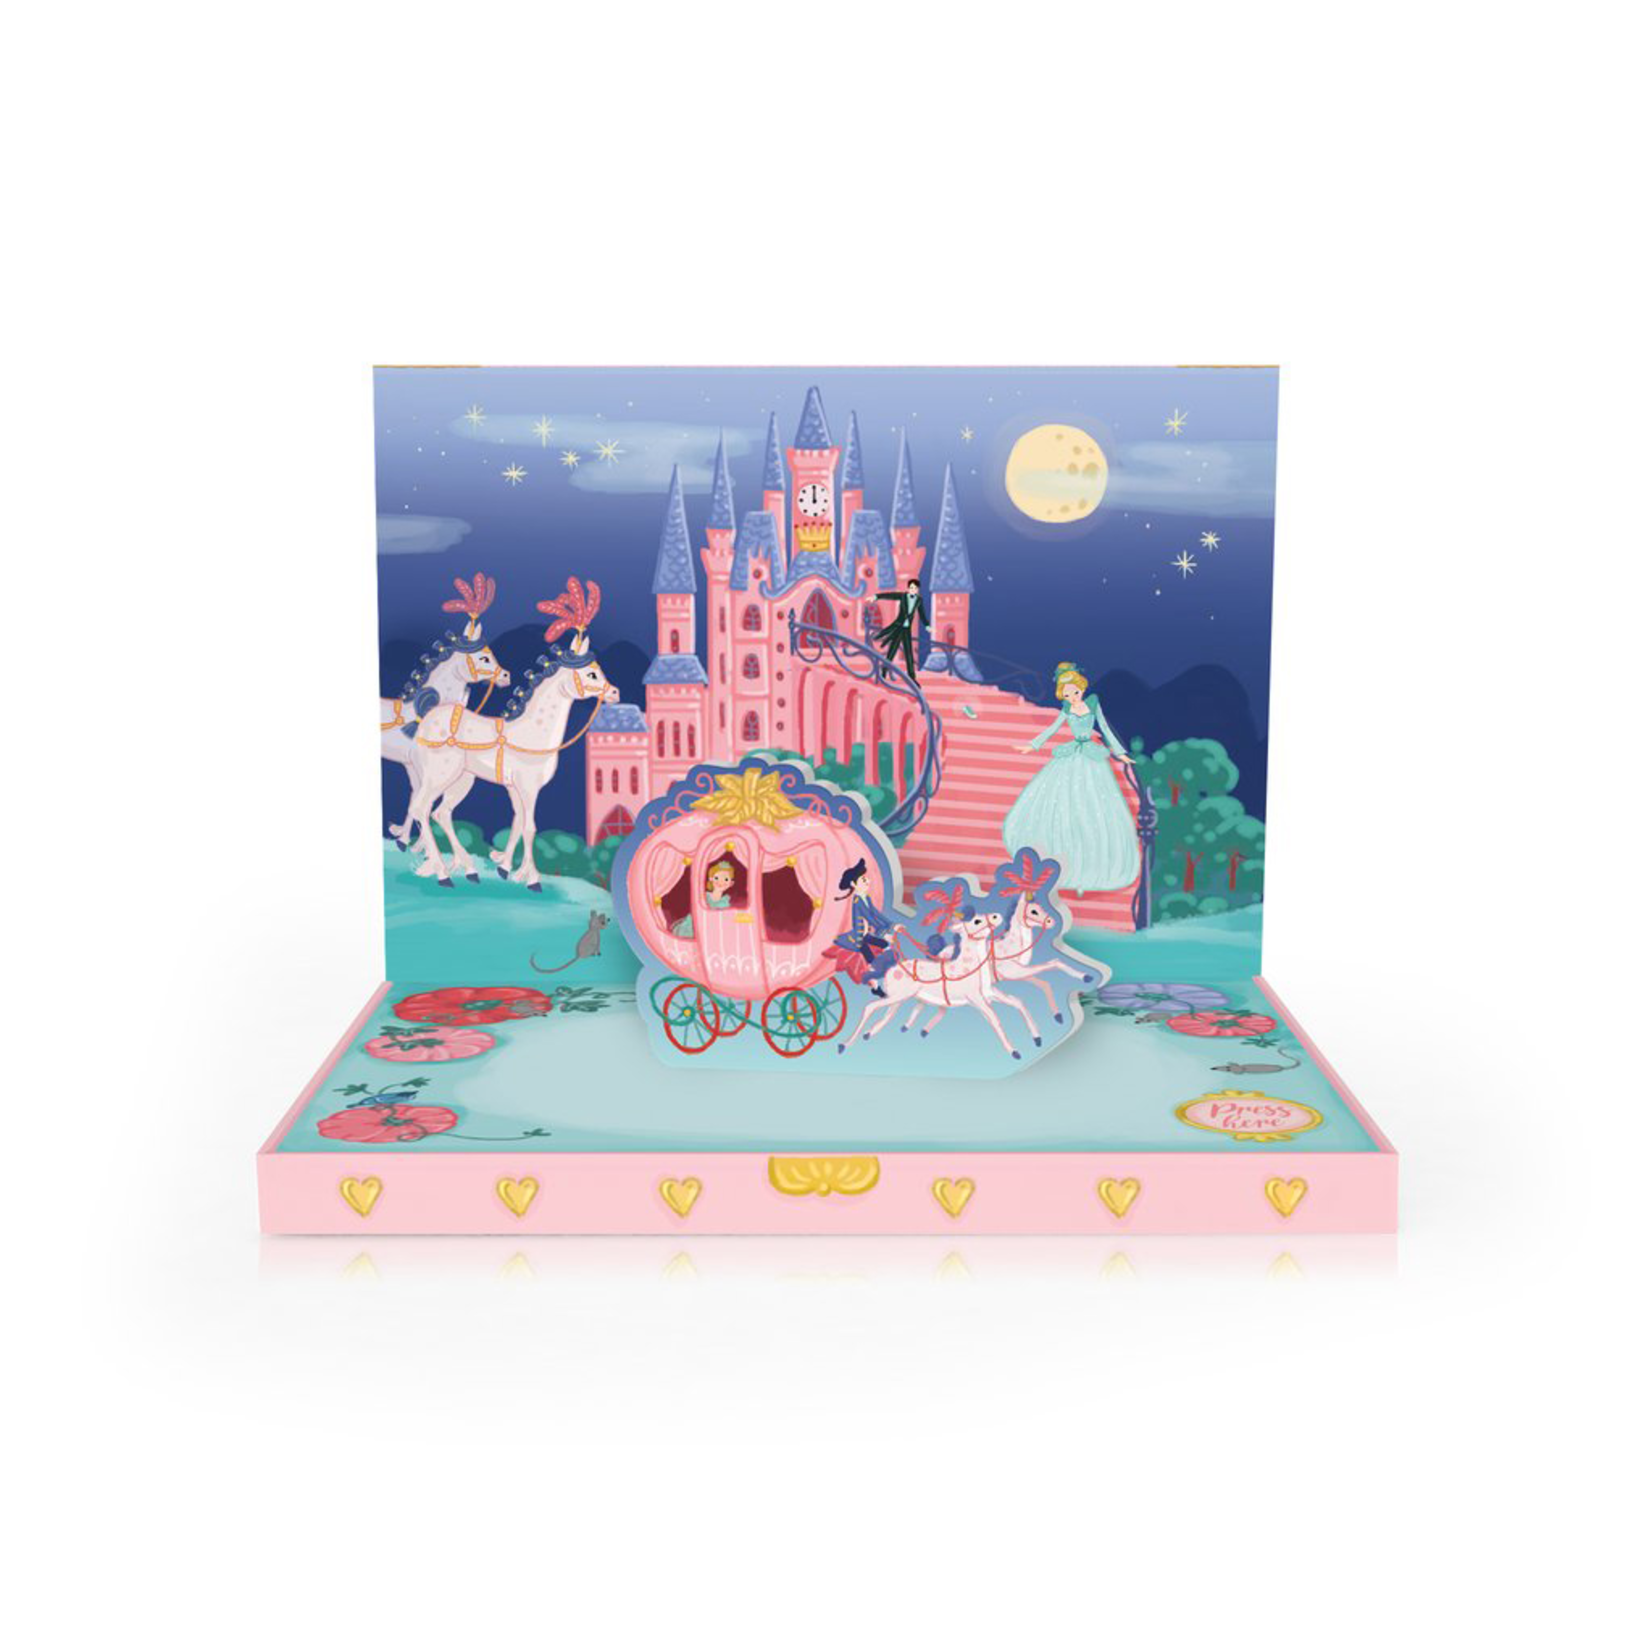 Cinderella’s Dream Moving Musical Box Card